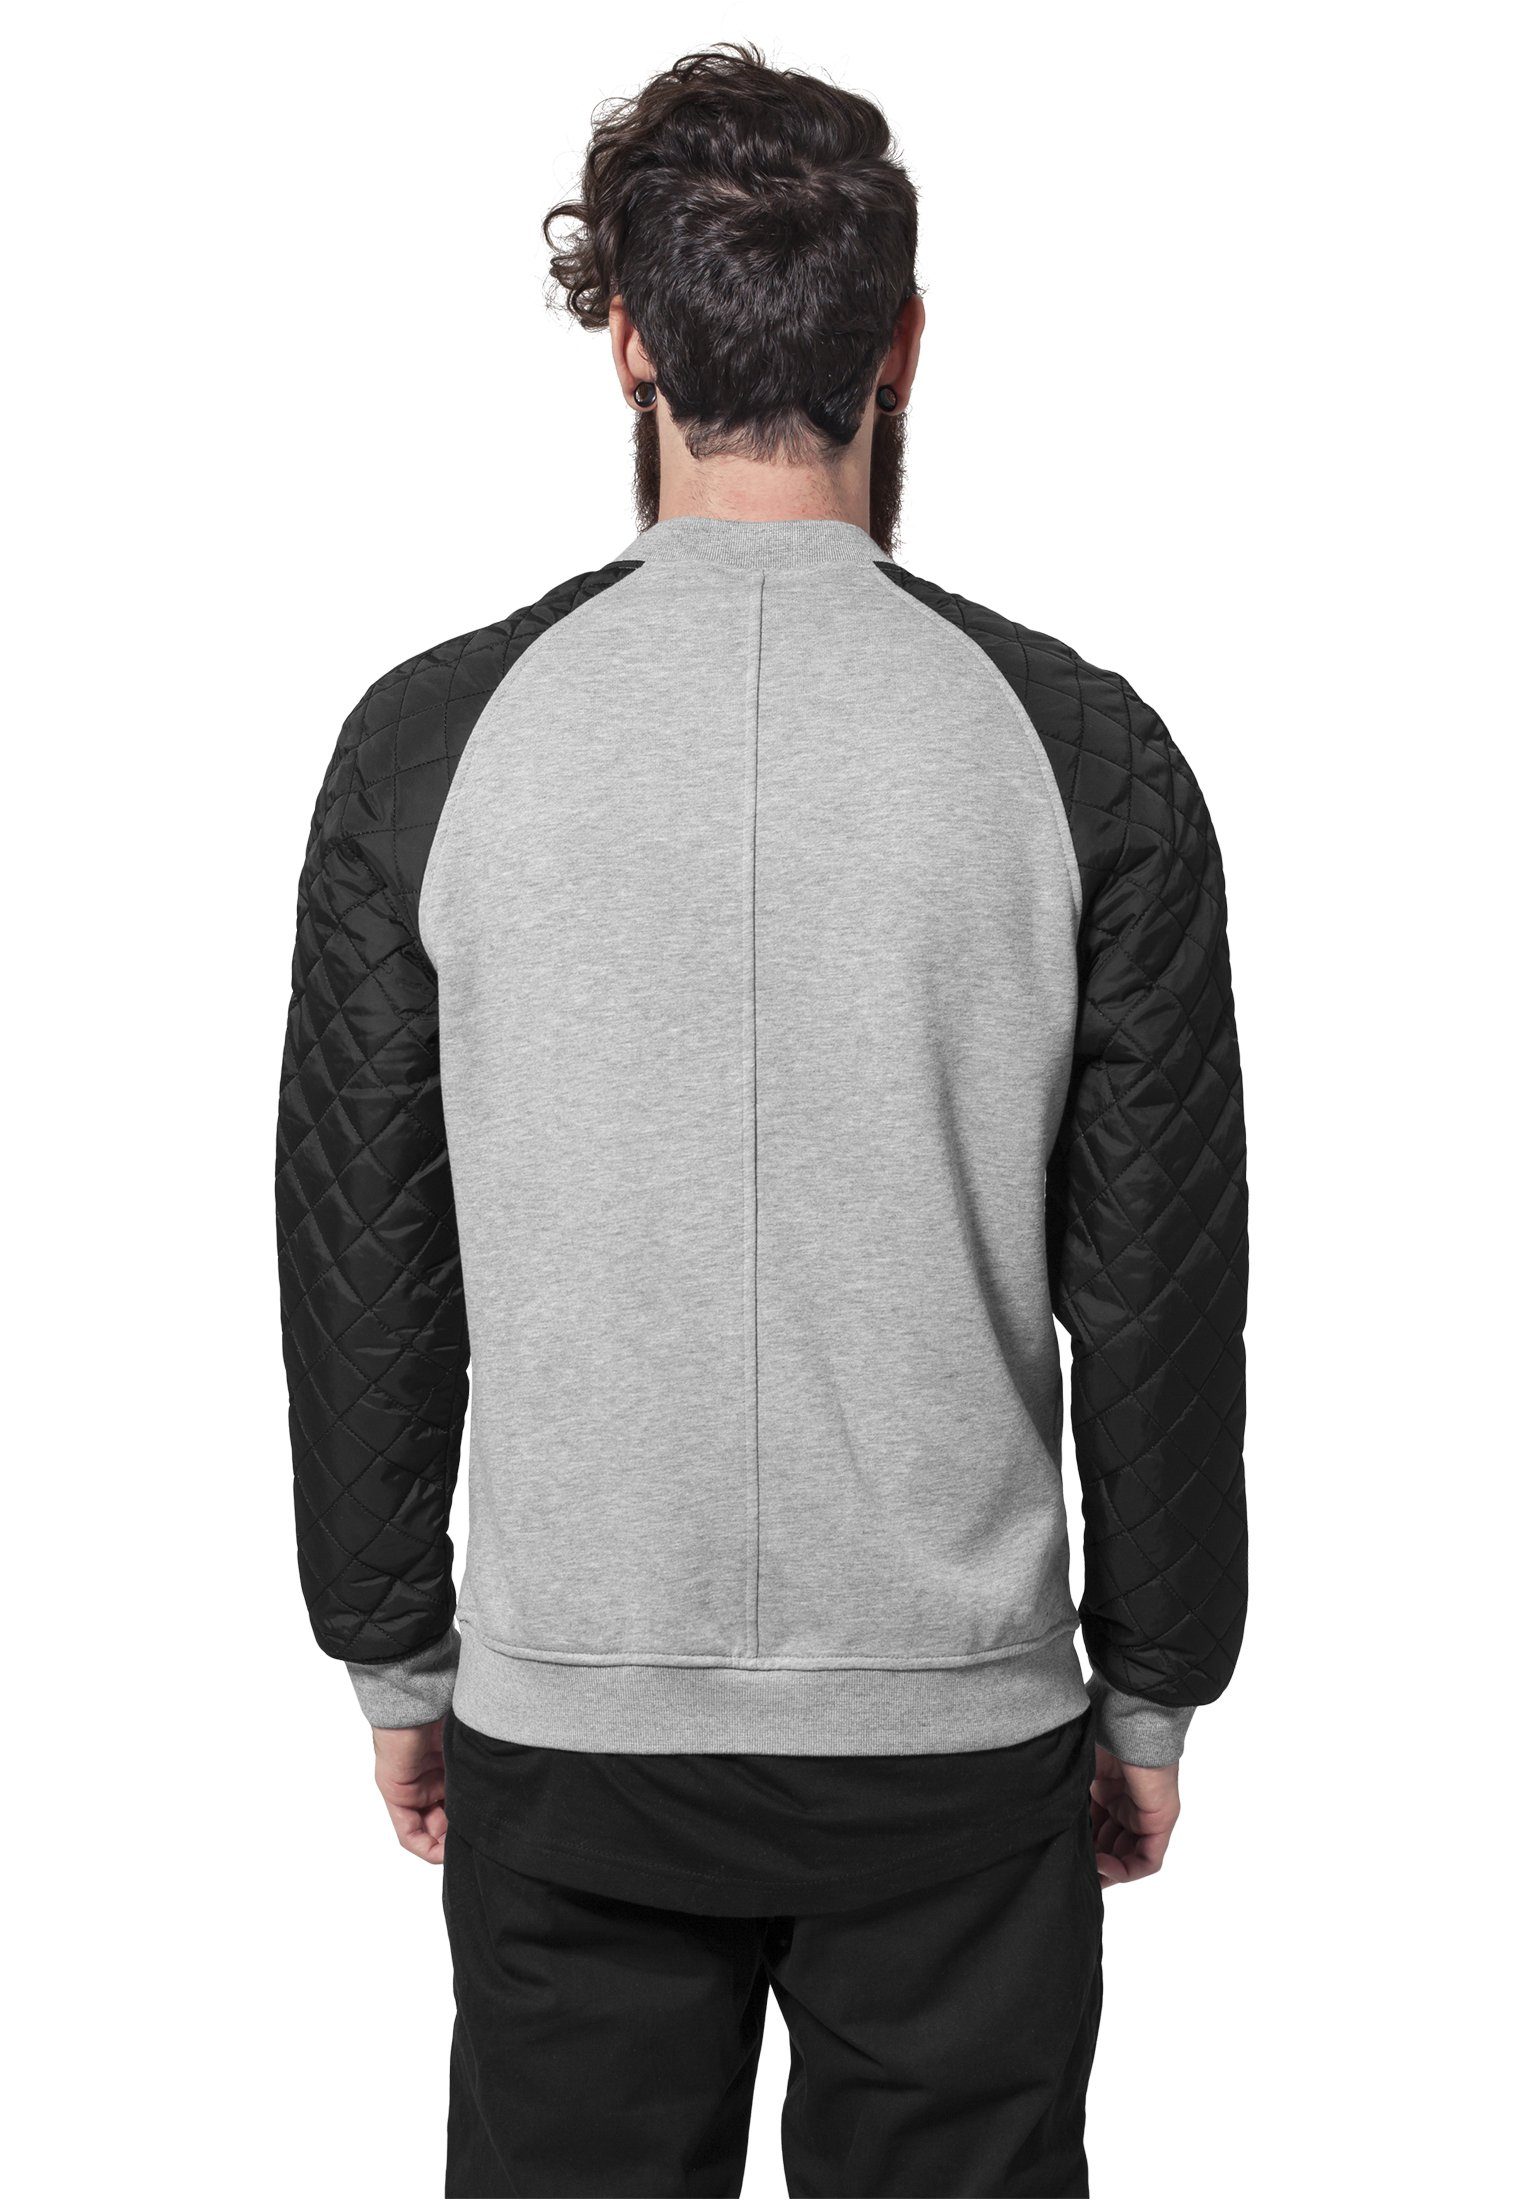 URBAN CLASSICS Outdoorjacke Herren Diamond Sweatjacket (1-St) Nylon grey/black-00119